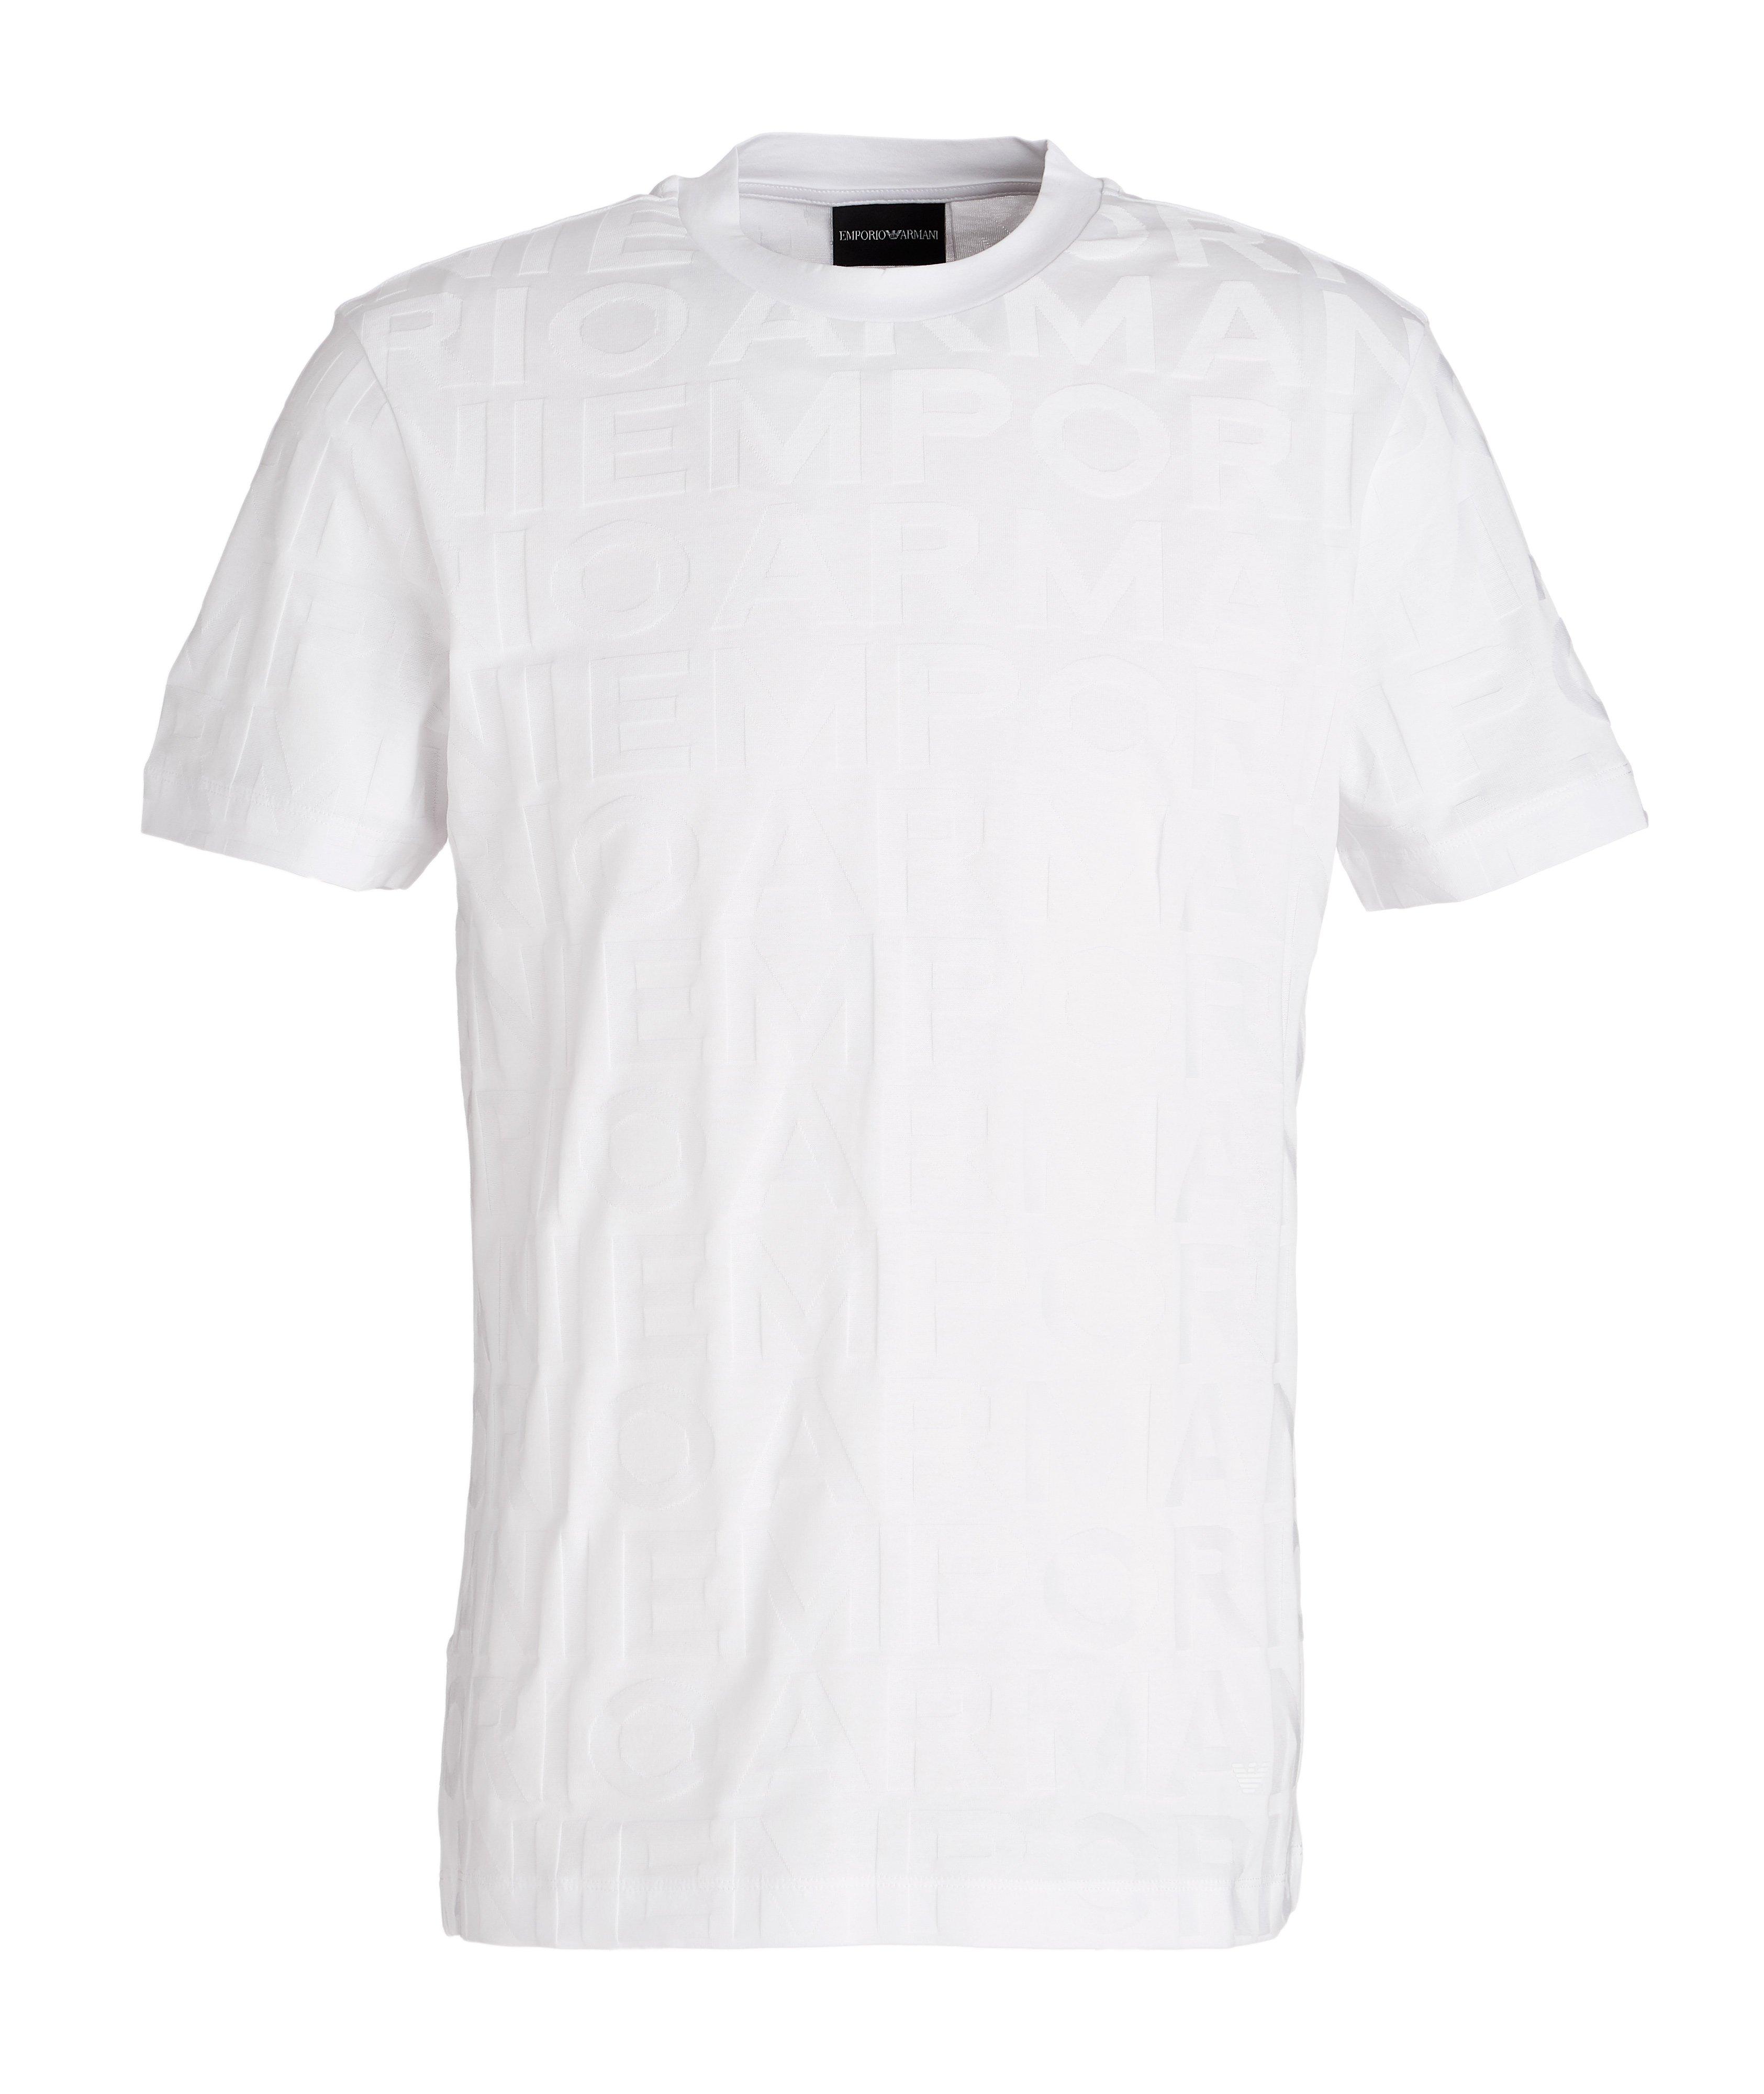 Jacquard Lettering Cotton T-Shirt image 0